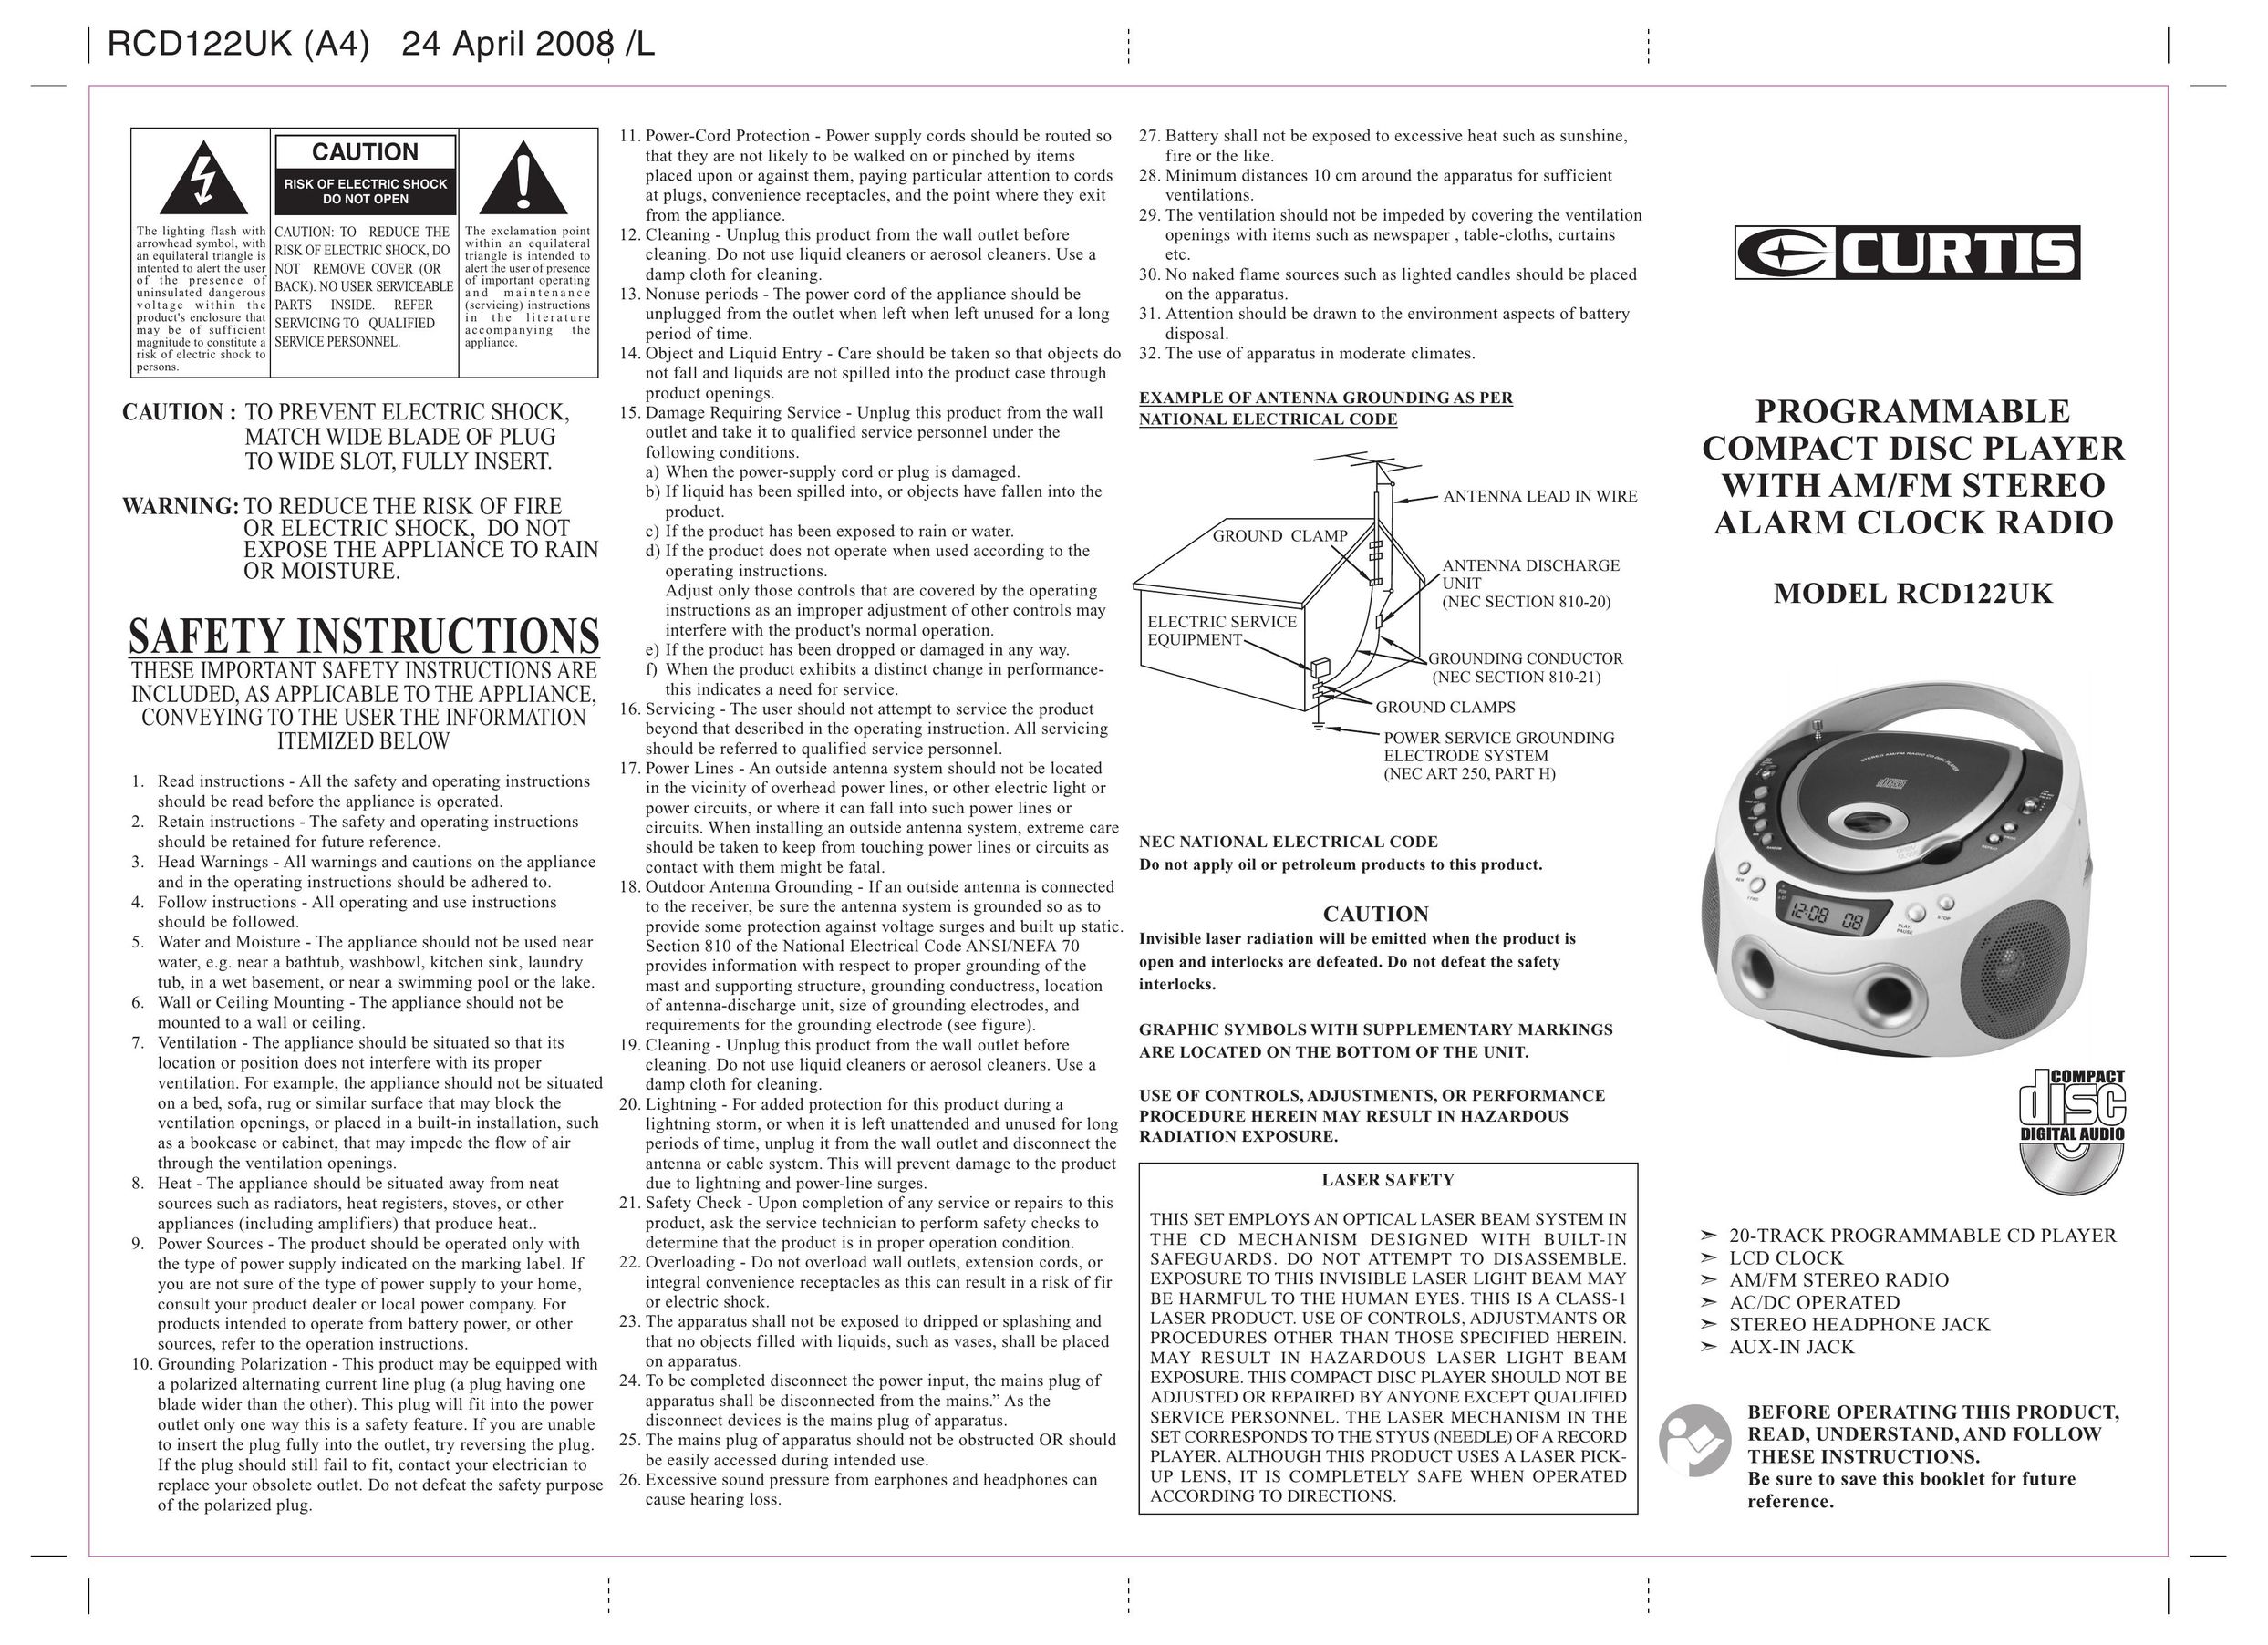 Curtis RCD122UK CD Player User Manual